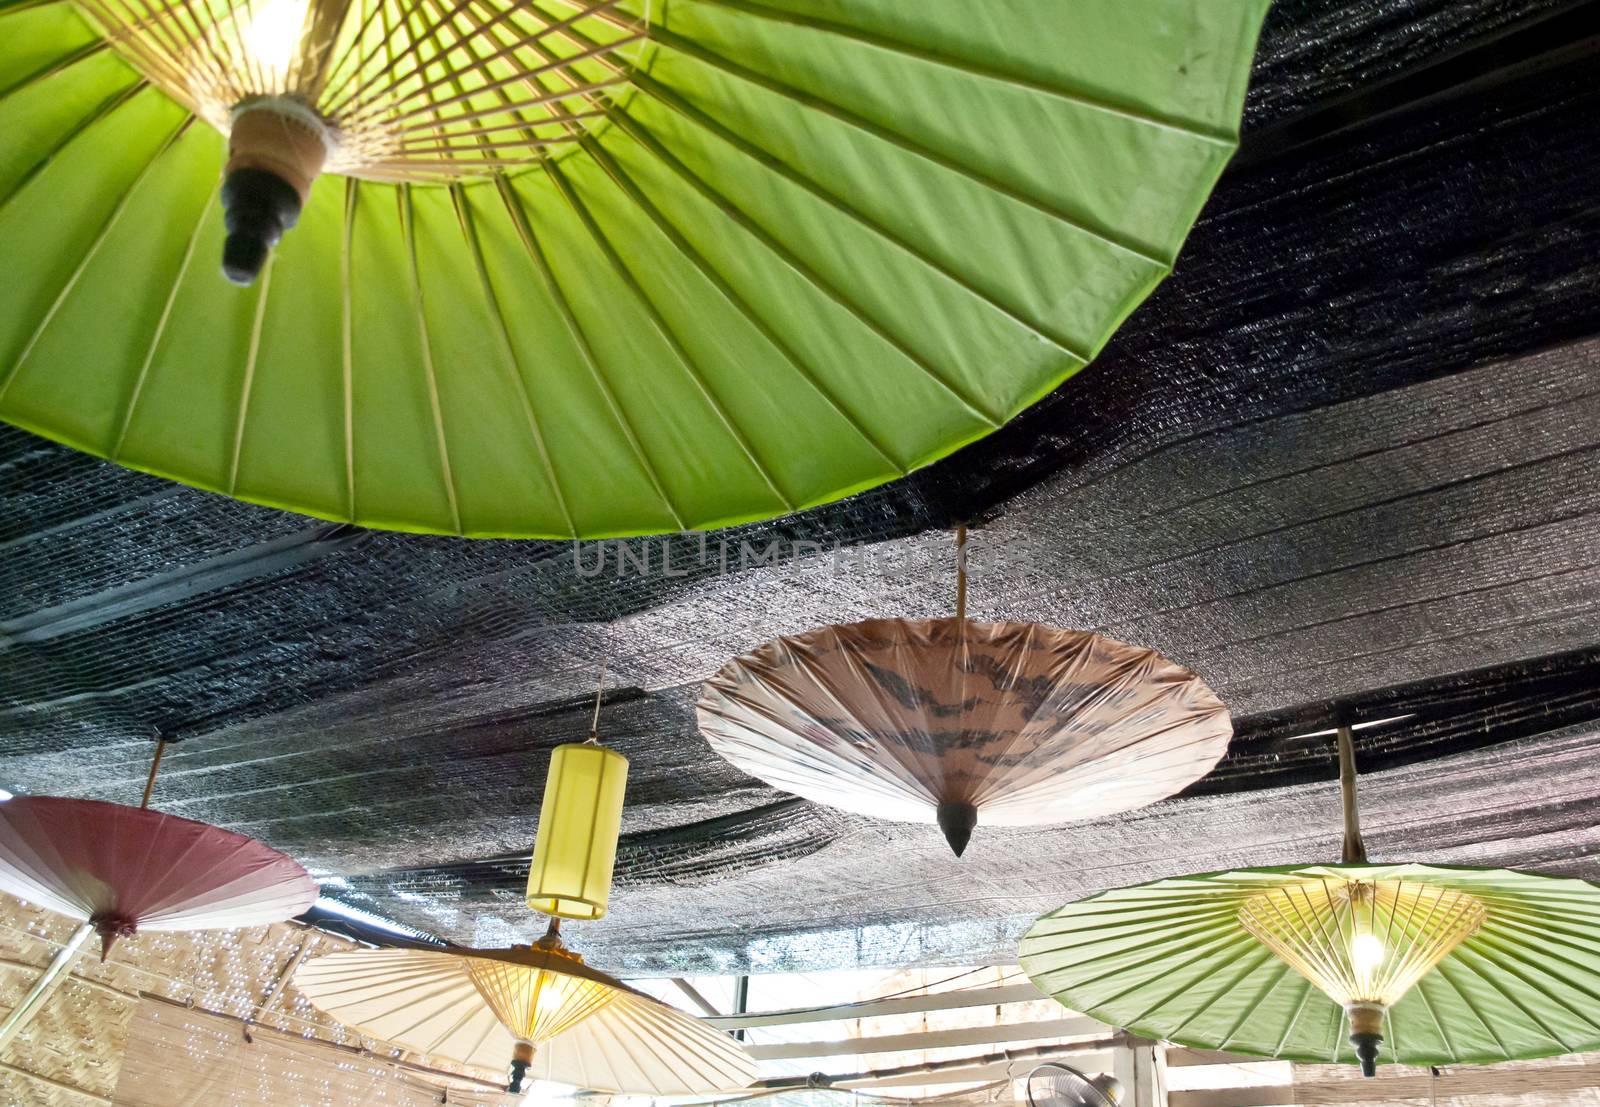 Under an color umbrella with lighting downlight by rakoptonLPN